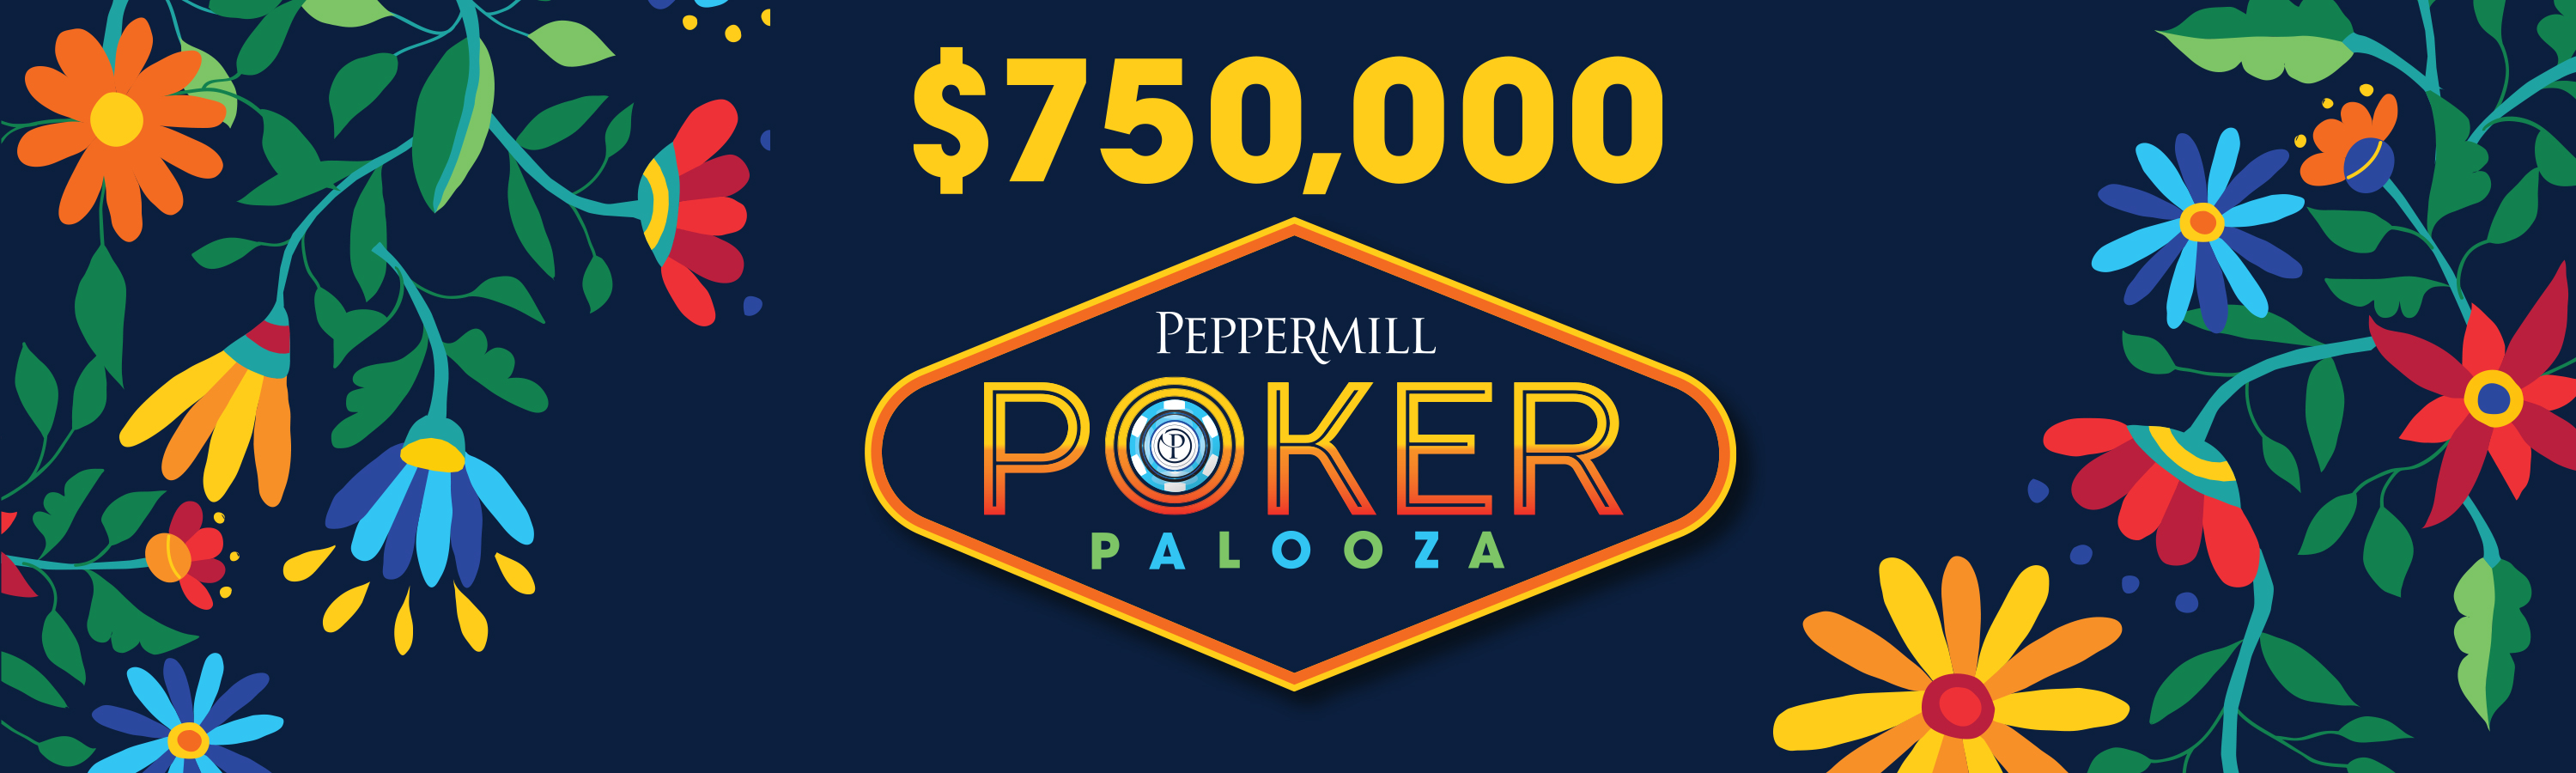 Spring 750,000 Peppermill Poker Palooza